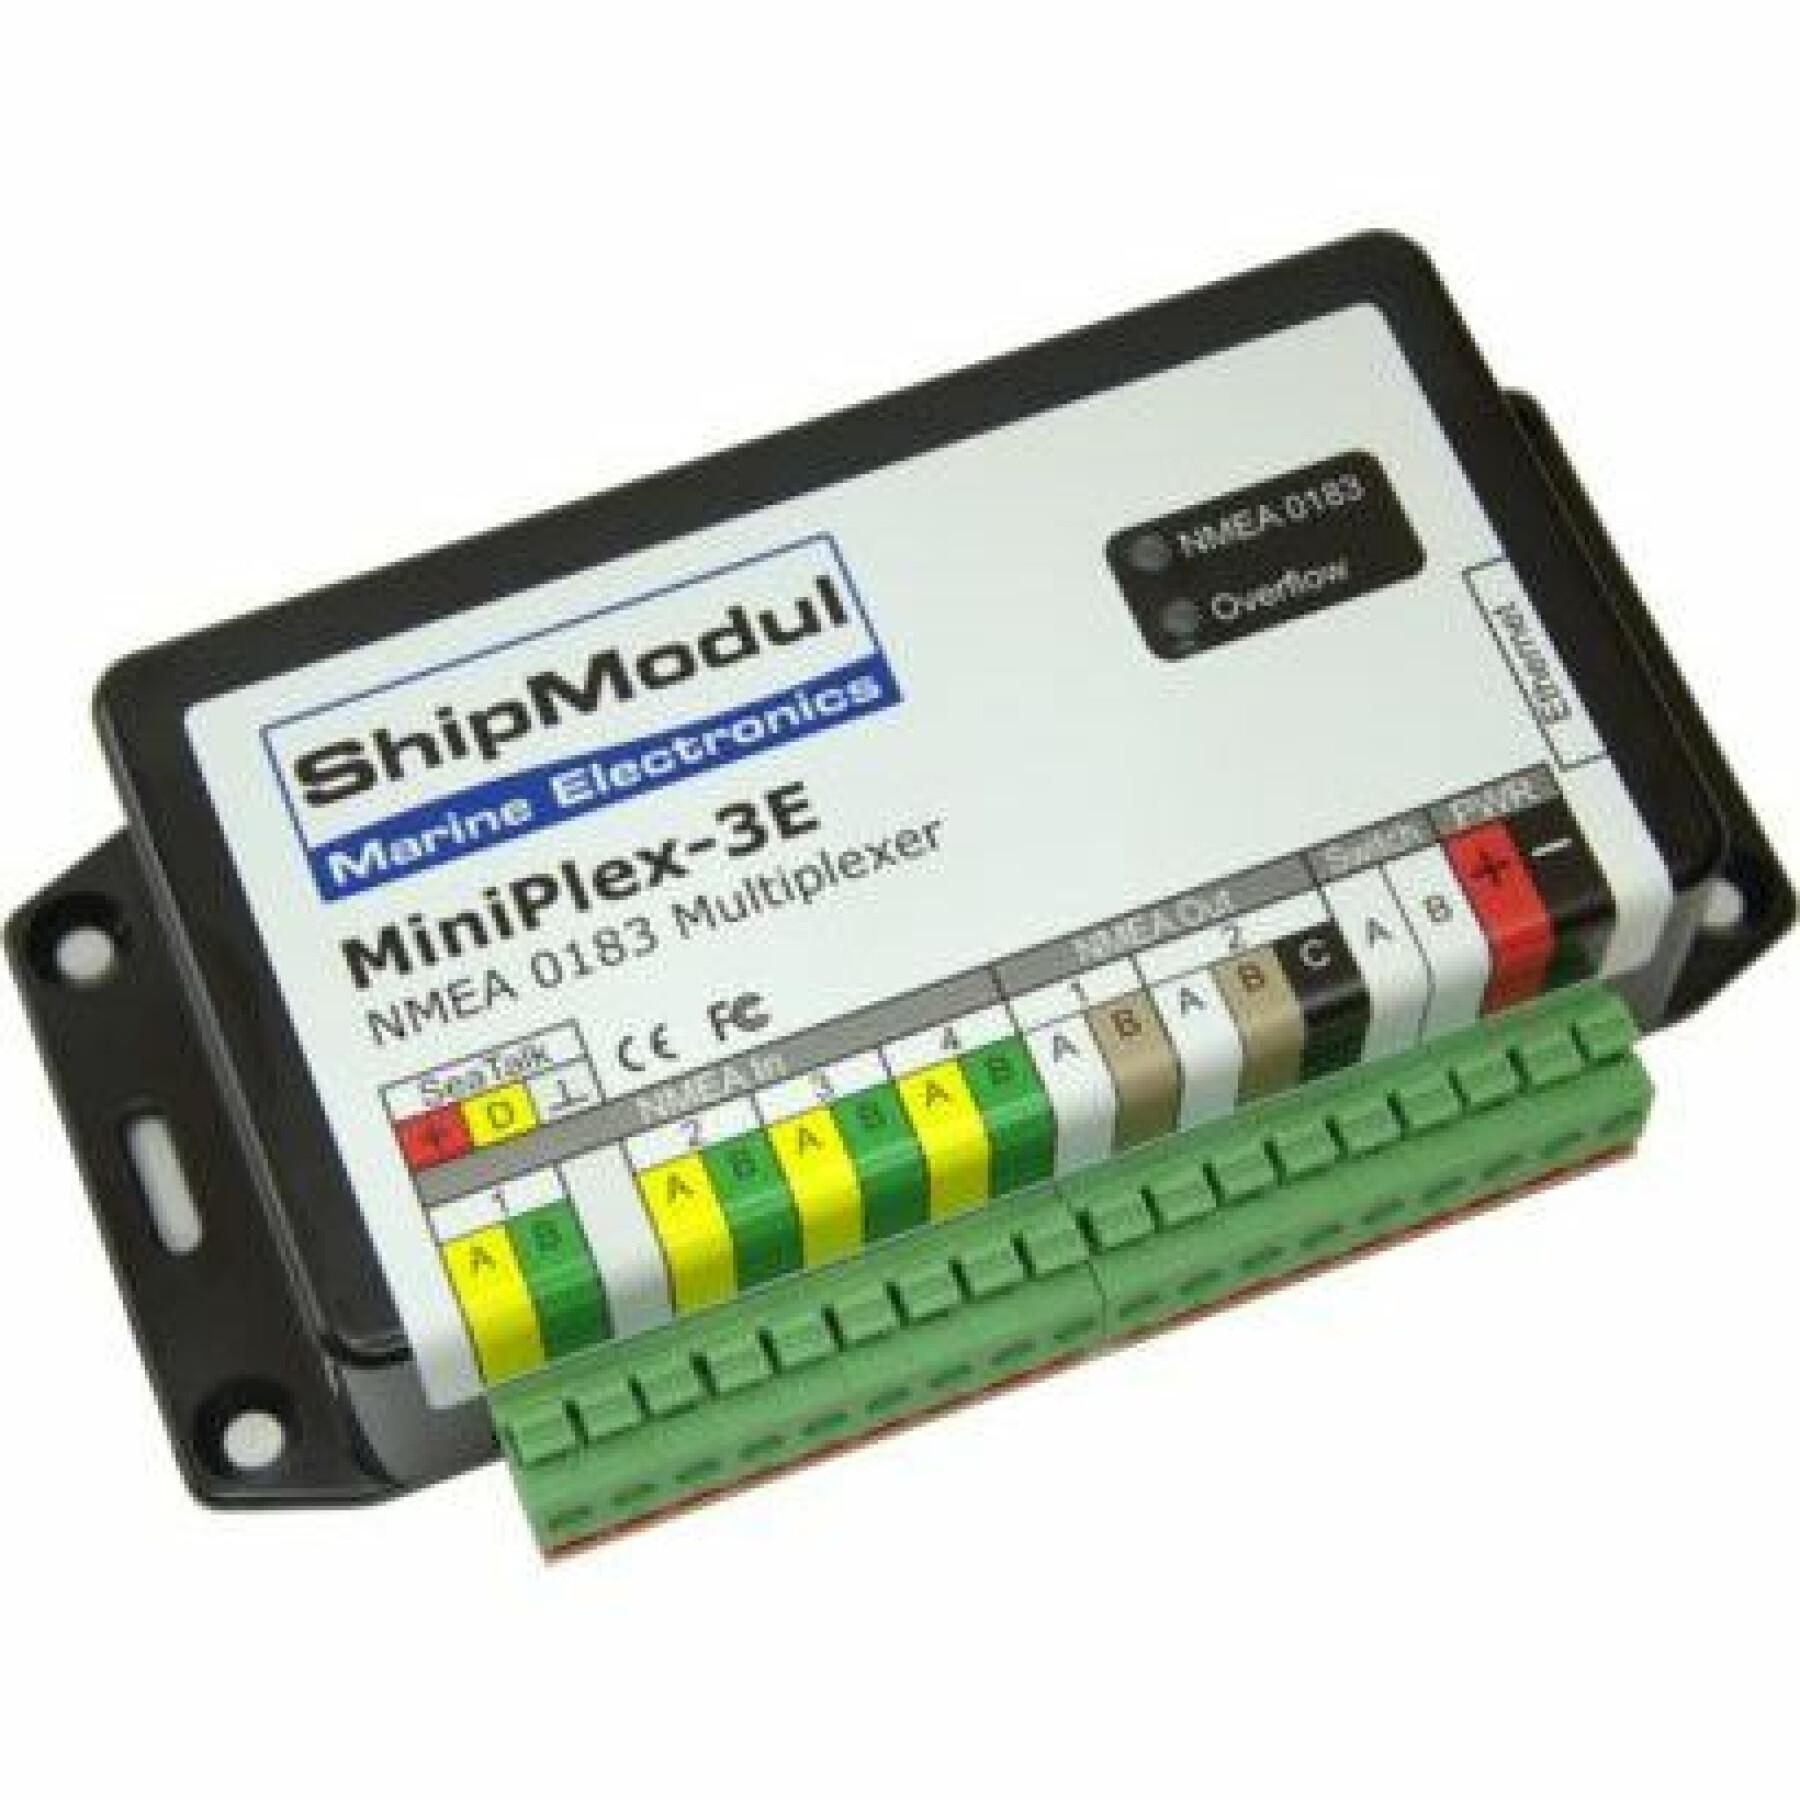 Multiplexeur version éthernet ShipModul Miniplex-3E